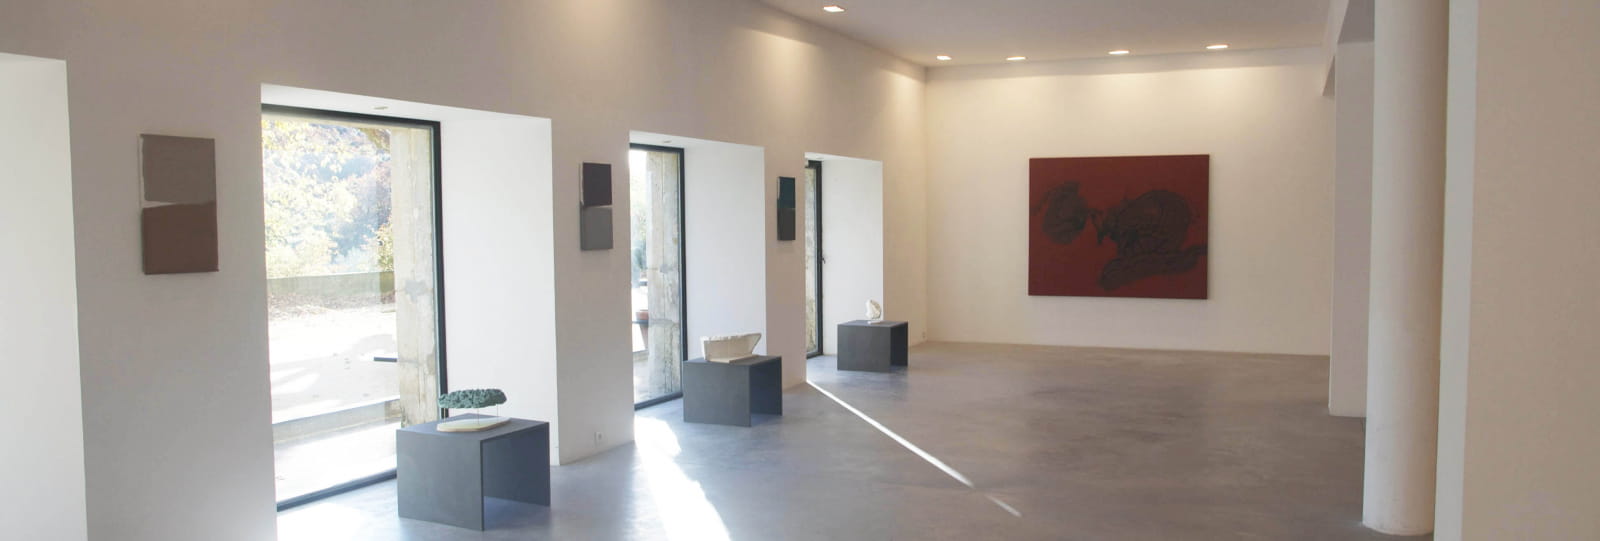 Eric Linard Galerie